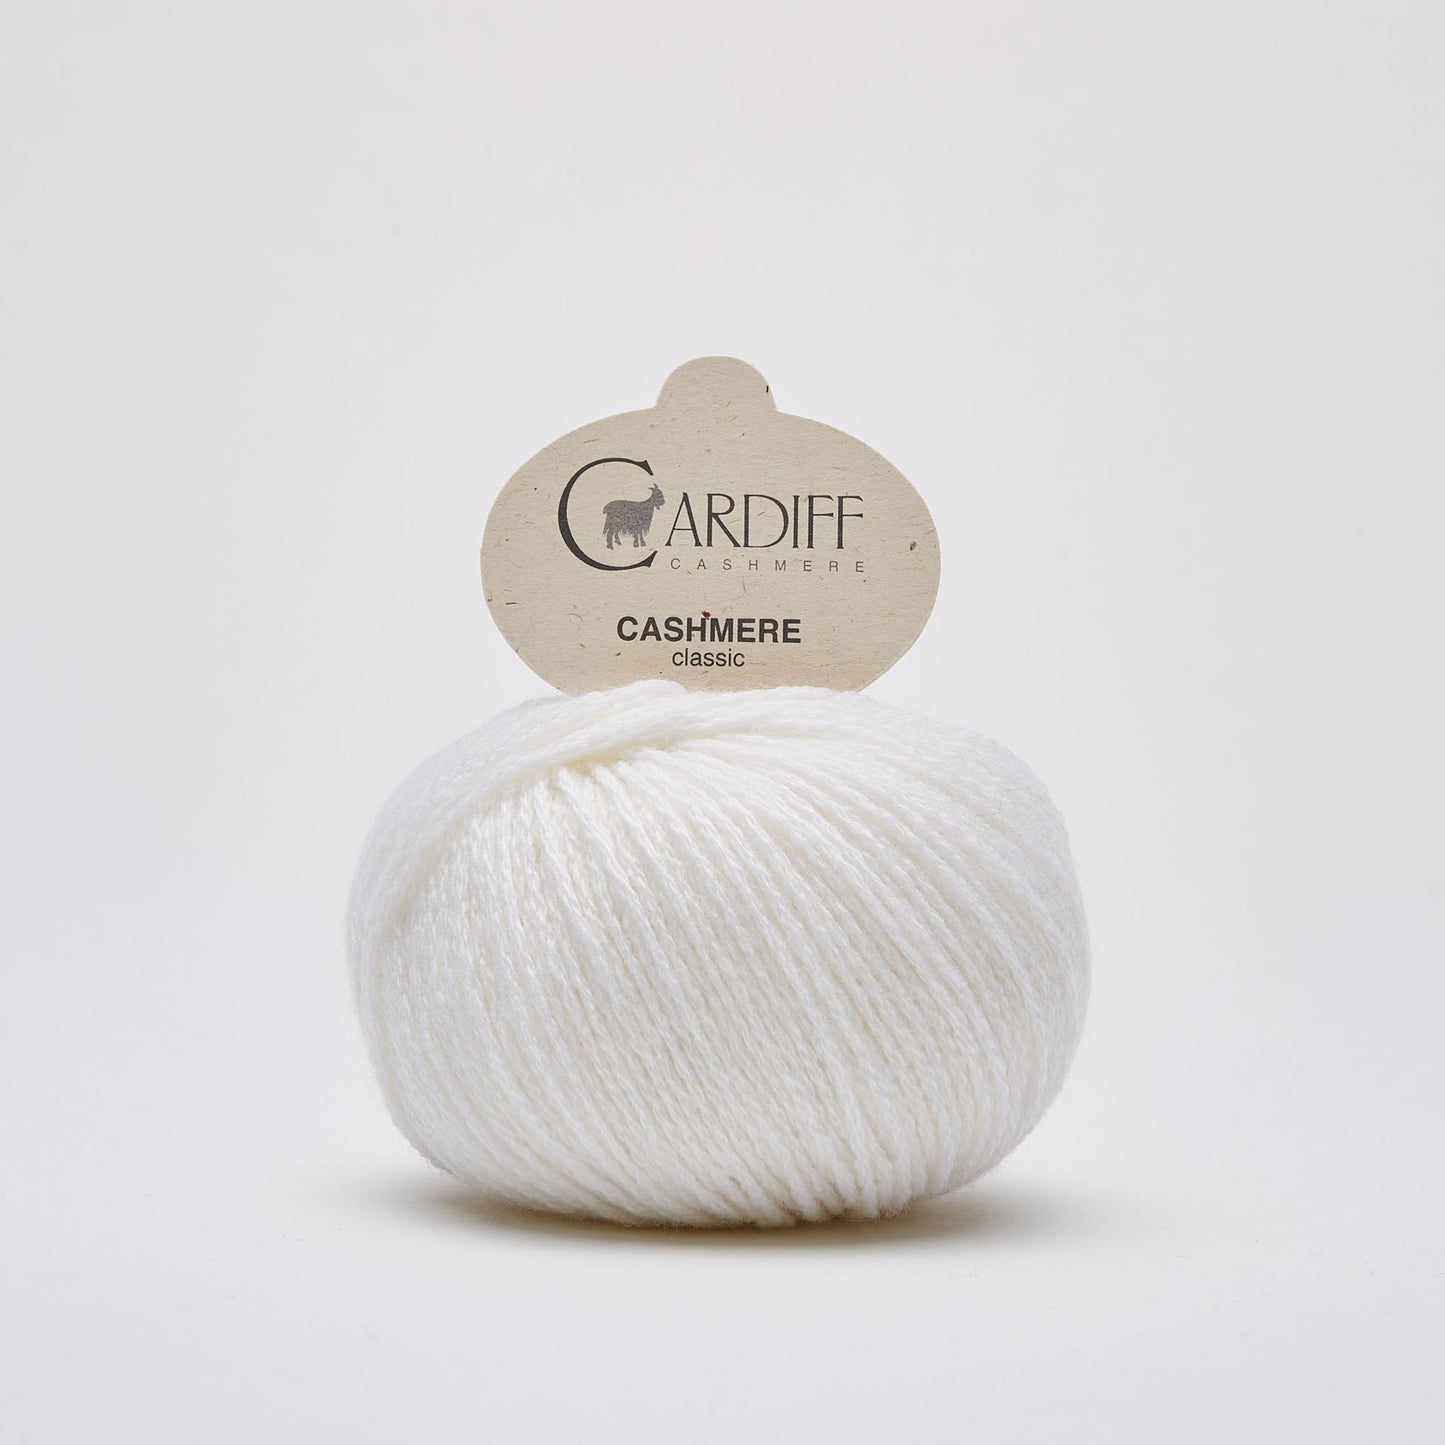 Cardiff CLASSIC gentle yarn, 623, CANDIDO, comp: 100% Cashmere